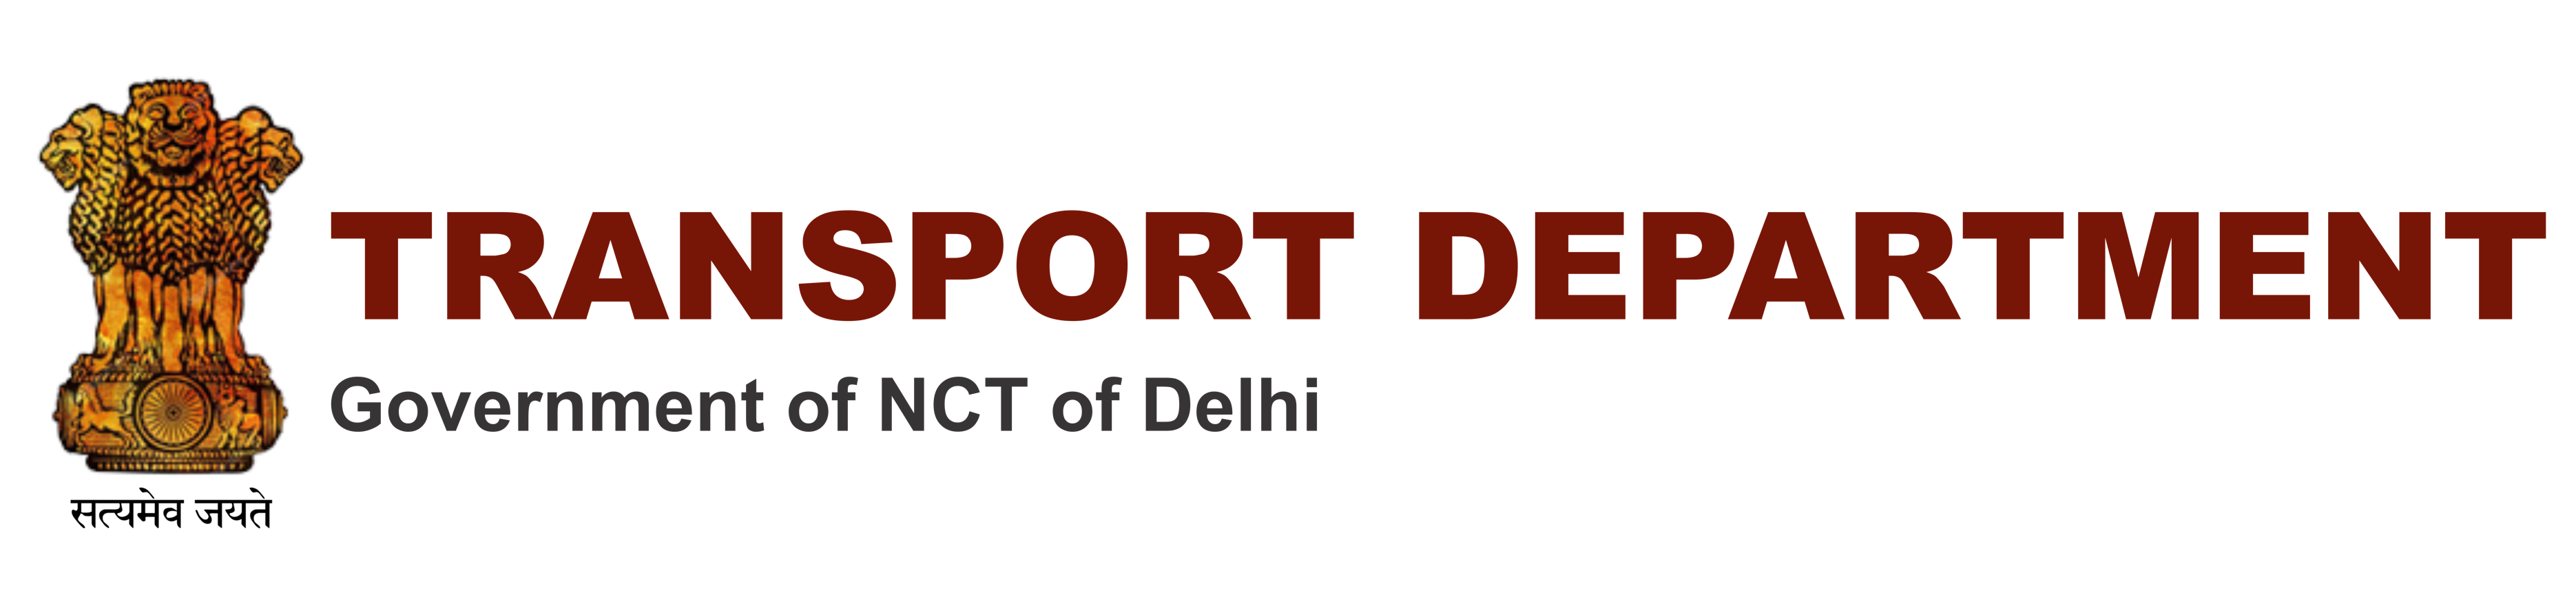 Transport Department Logo